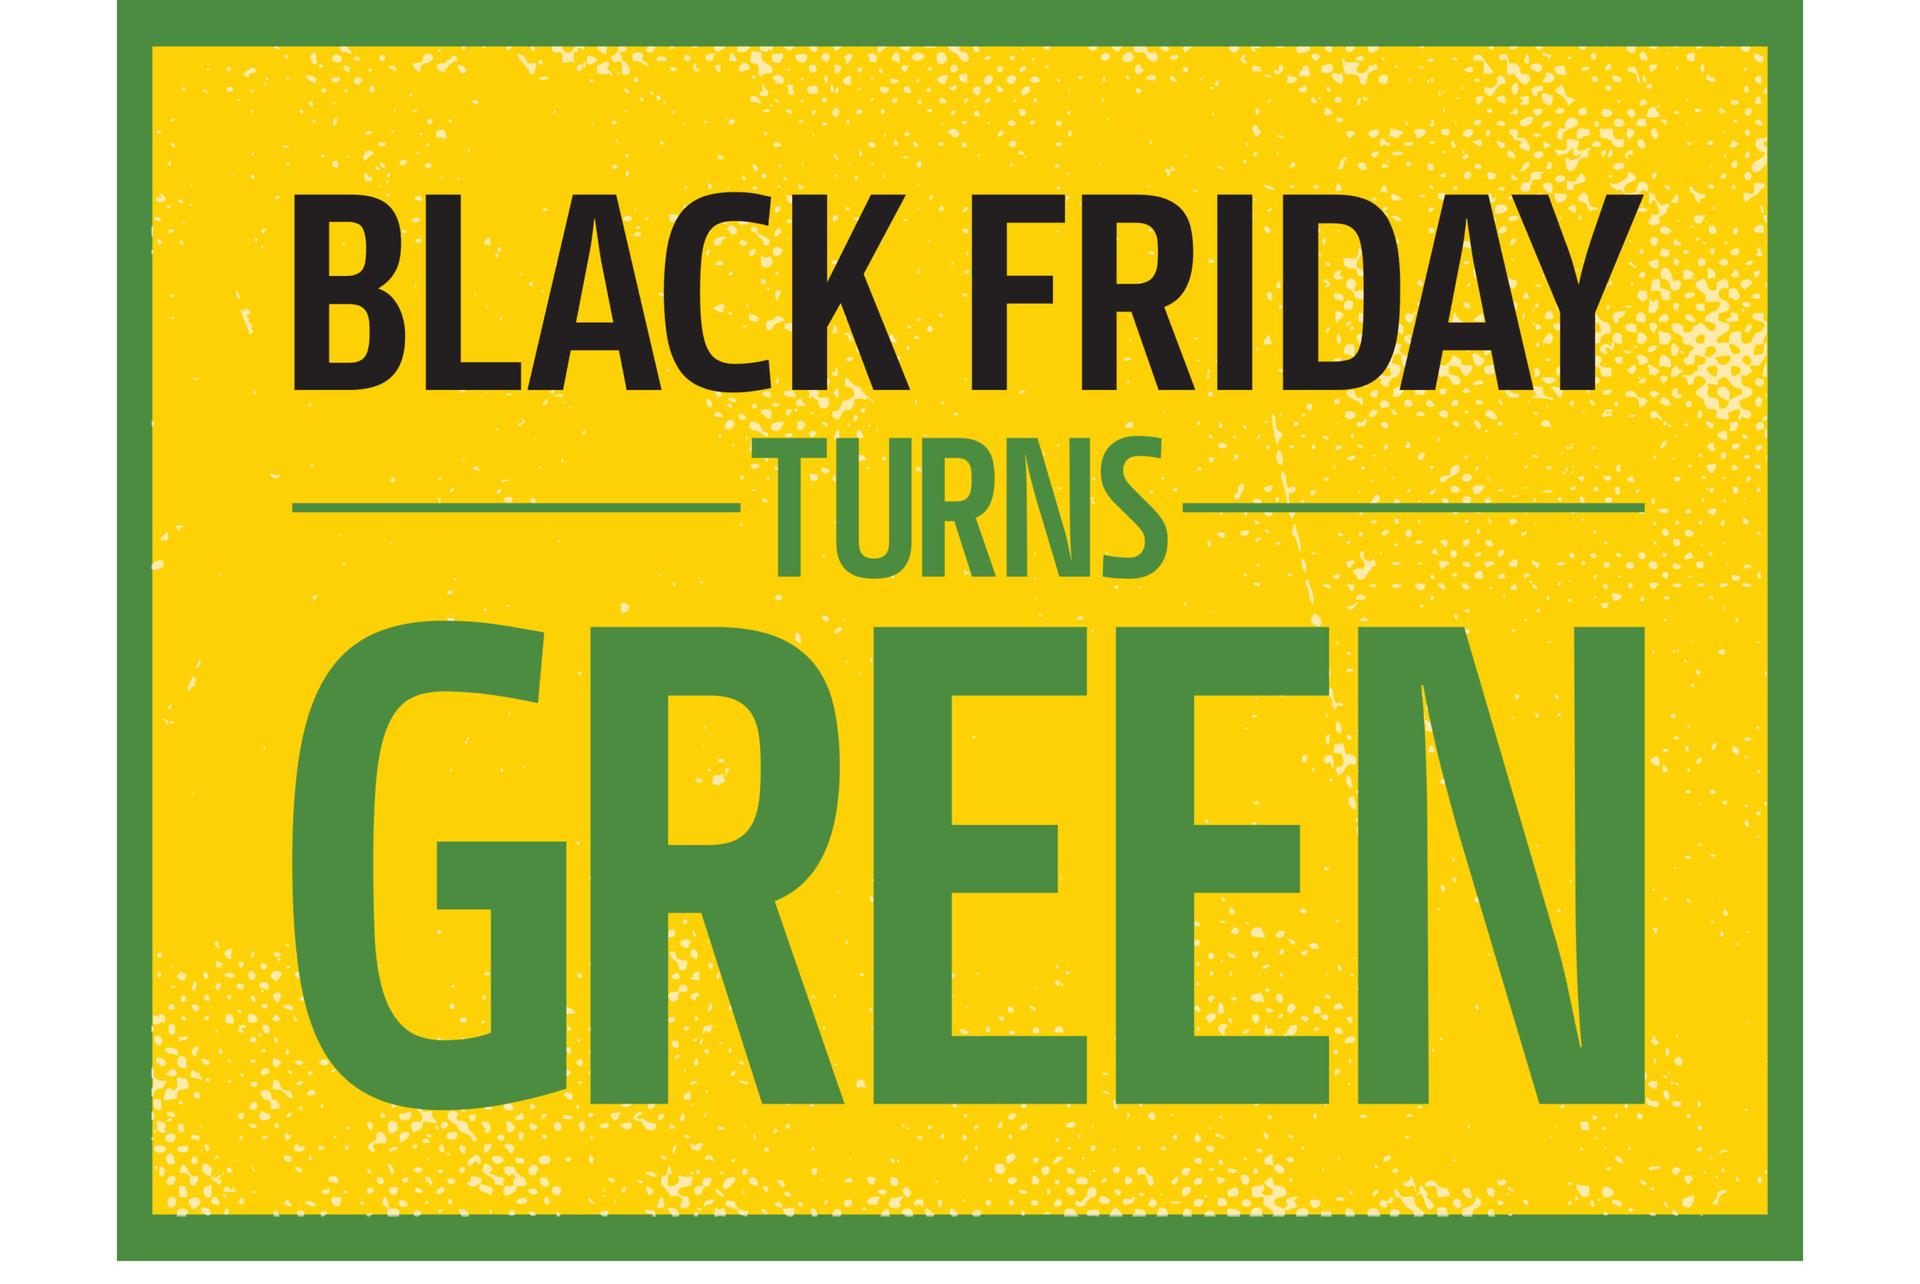 Black Friday Turns Green!